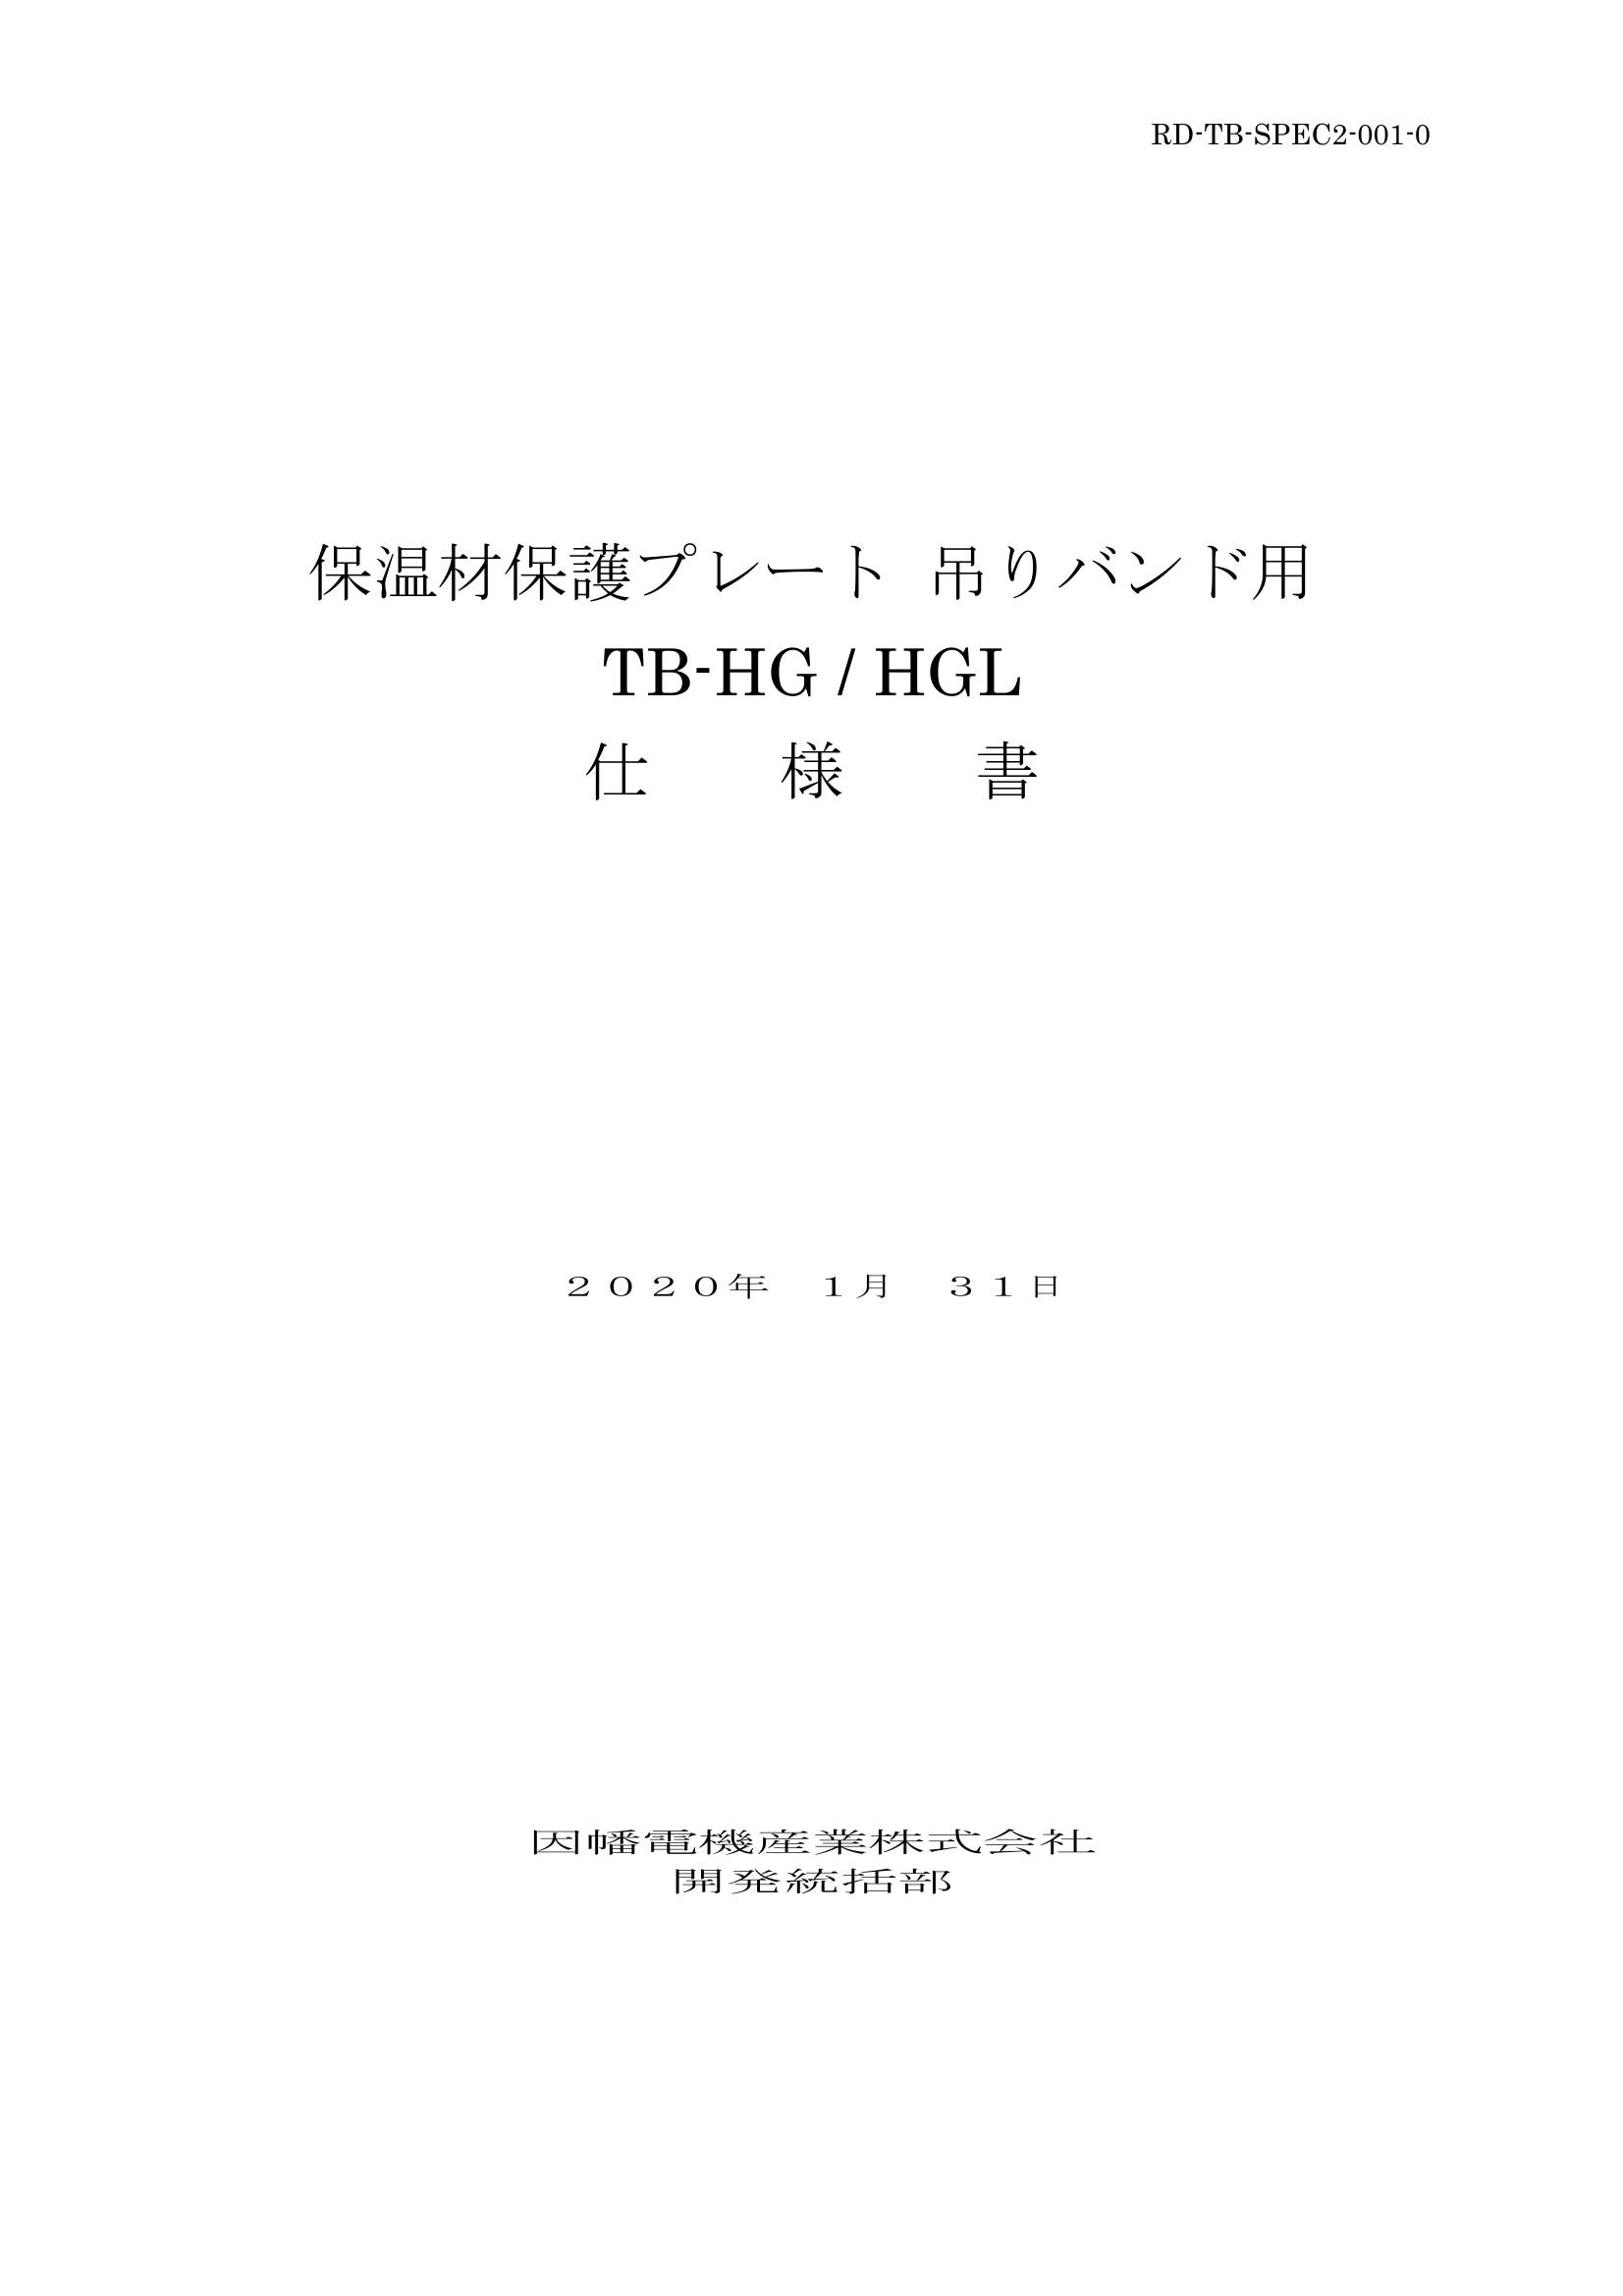 TB-HG_仕様書_20200131.pdf